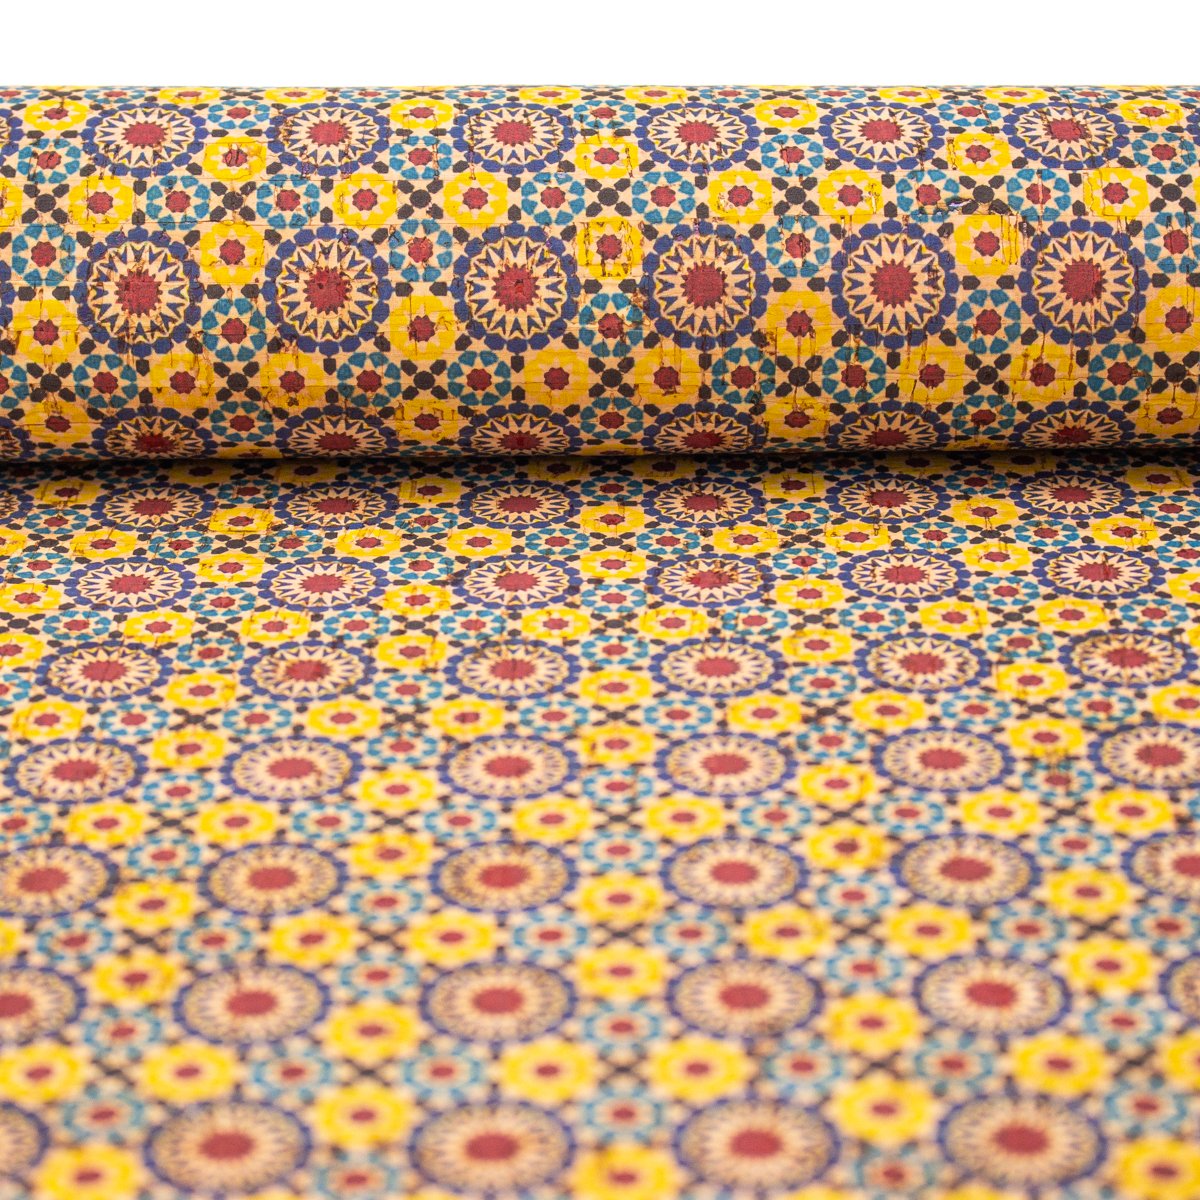 Cork fabric Tile, portuguese ceramic tile mosaic pattern COF-288